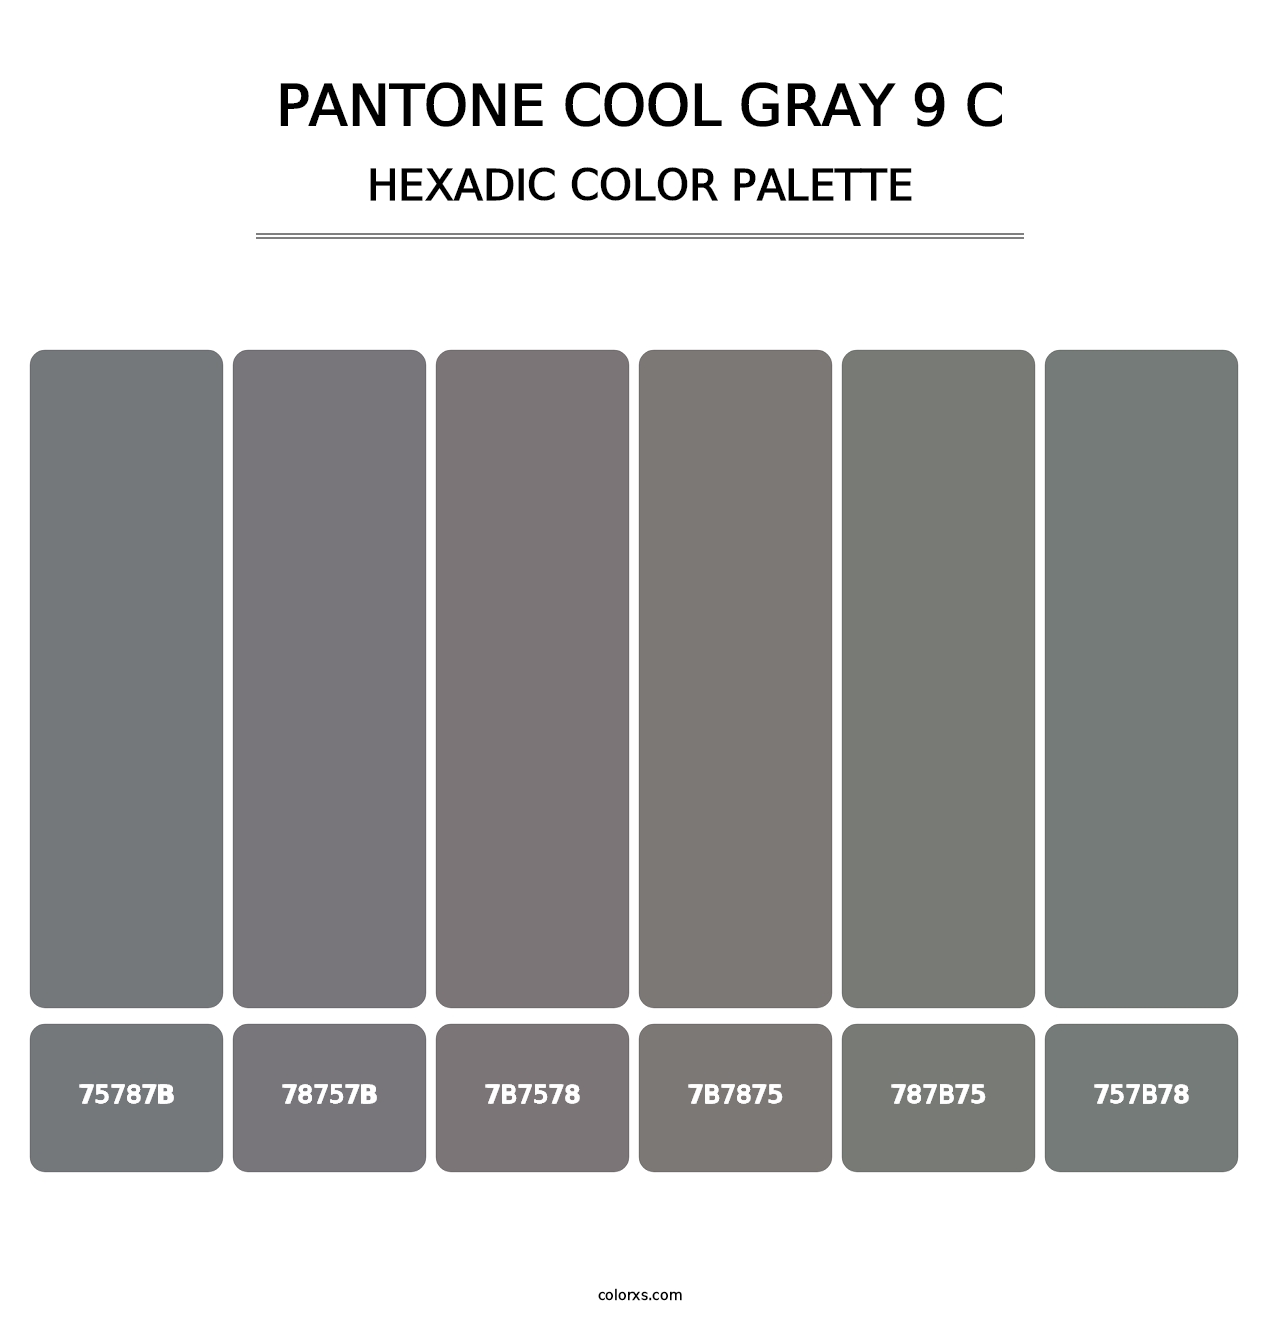 PANTONE Cool Gray 9 C - Hexadic Color Palette